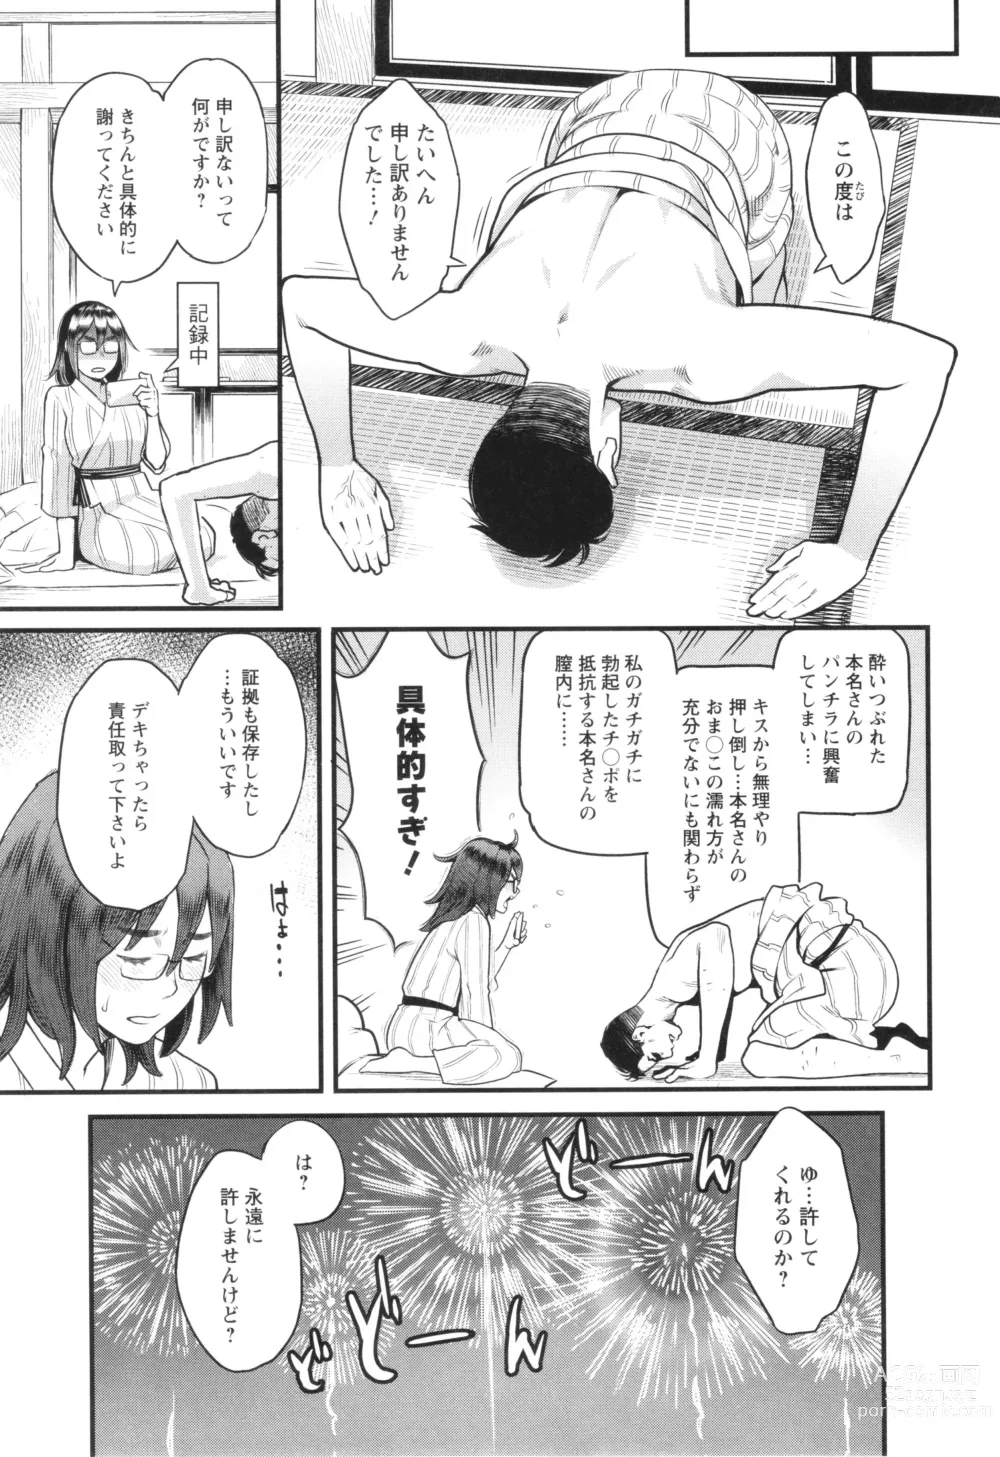 Page 188 of manga Hoshigaoka Star Volley